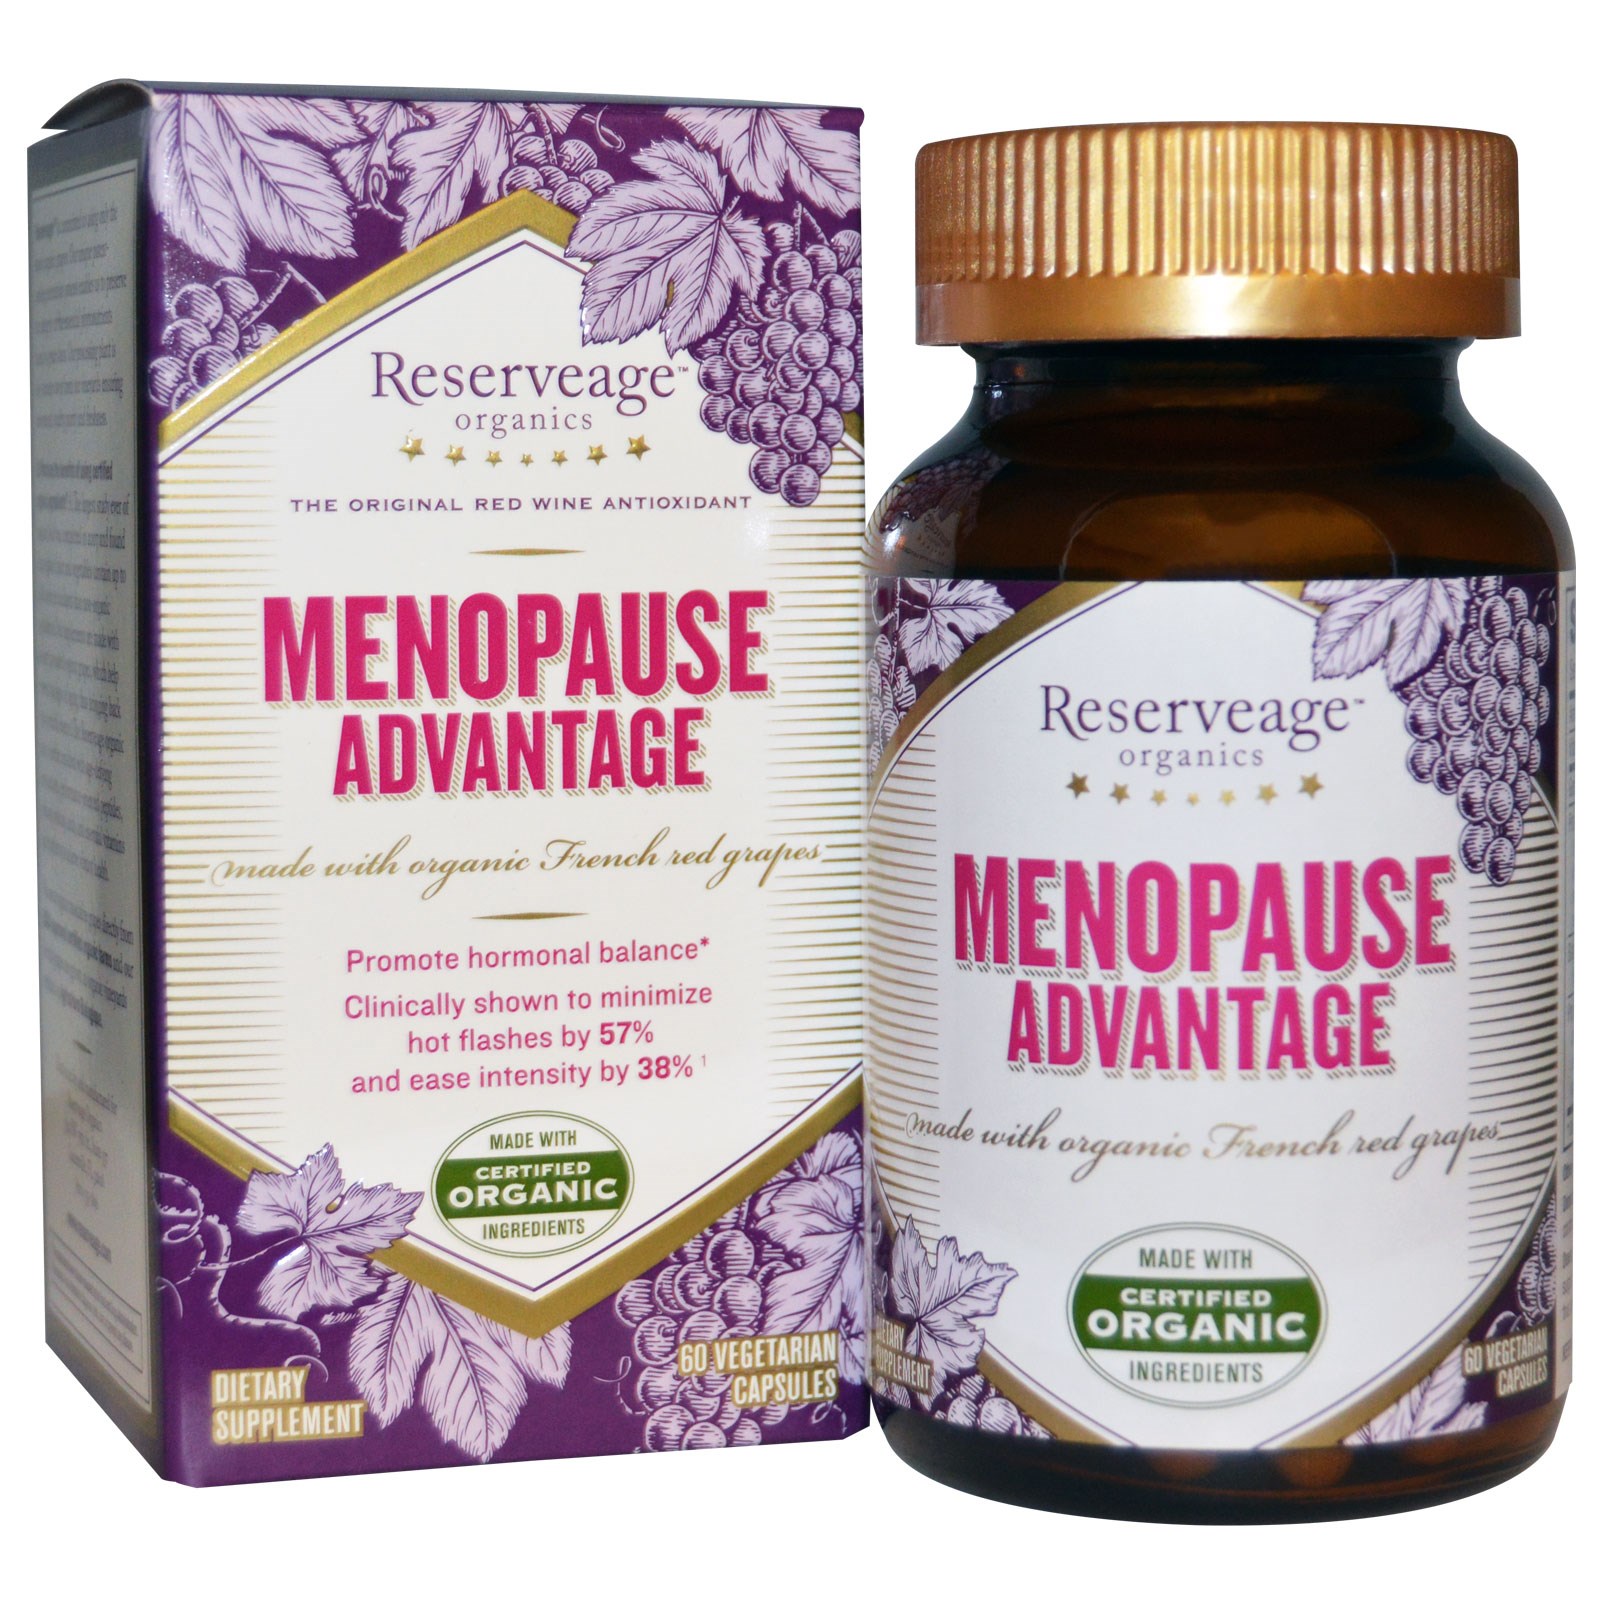 Бады при климаксе отзывы. Менопауза витамины. Менопауза БАД. Солгар менопауза. Витамины для женщин в менопаузе.